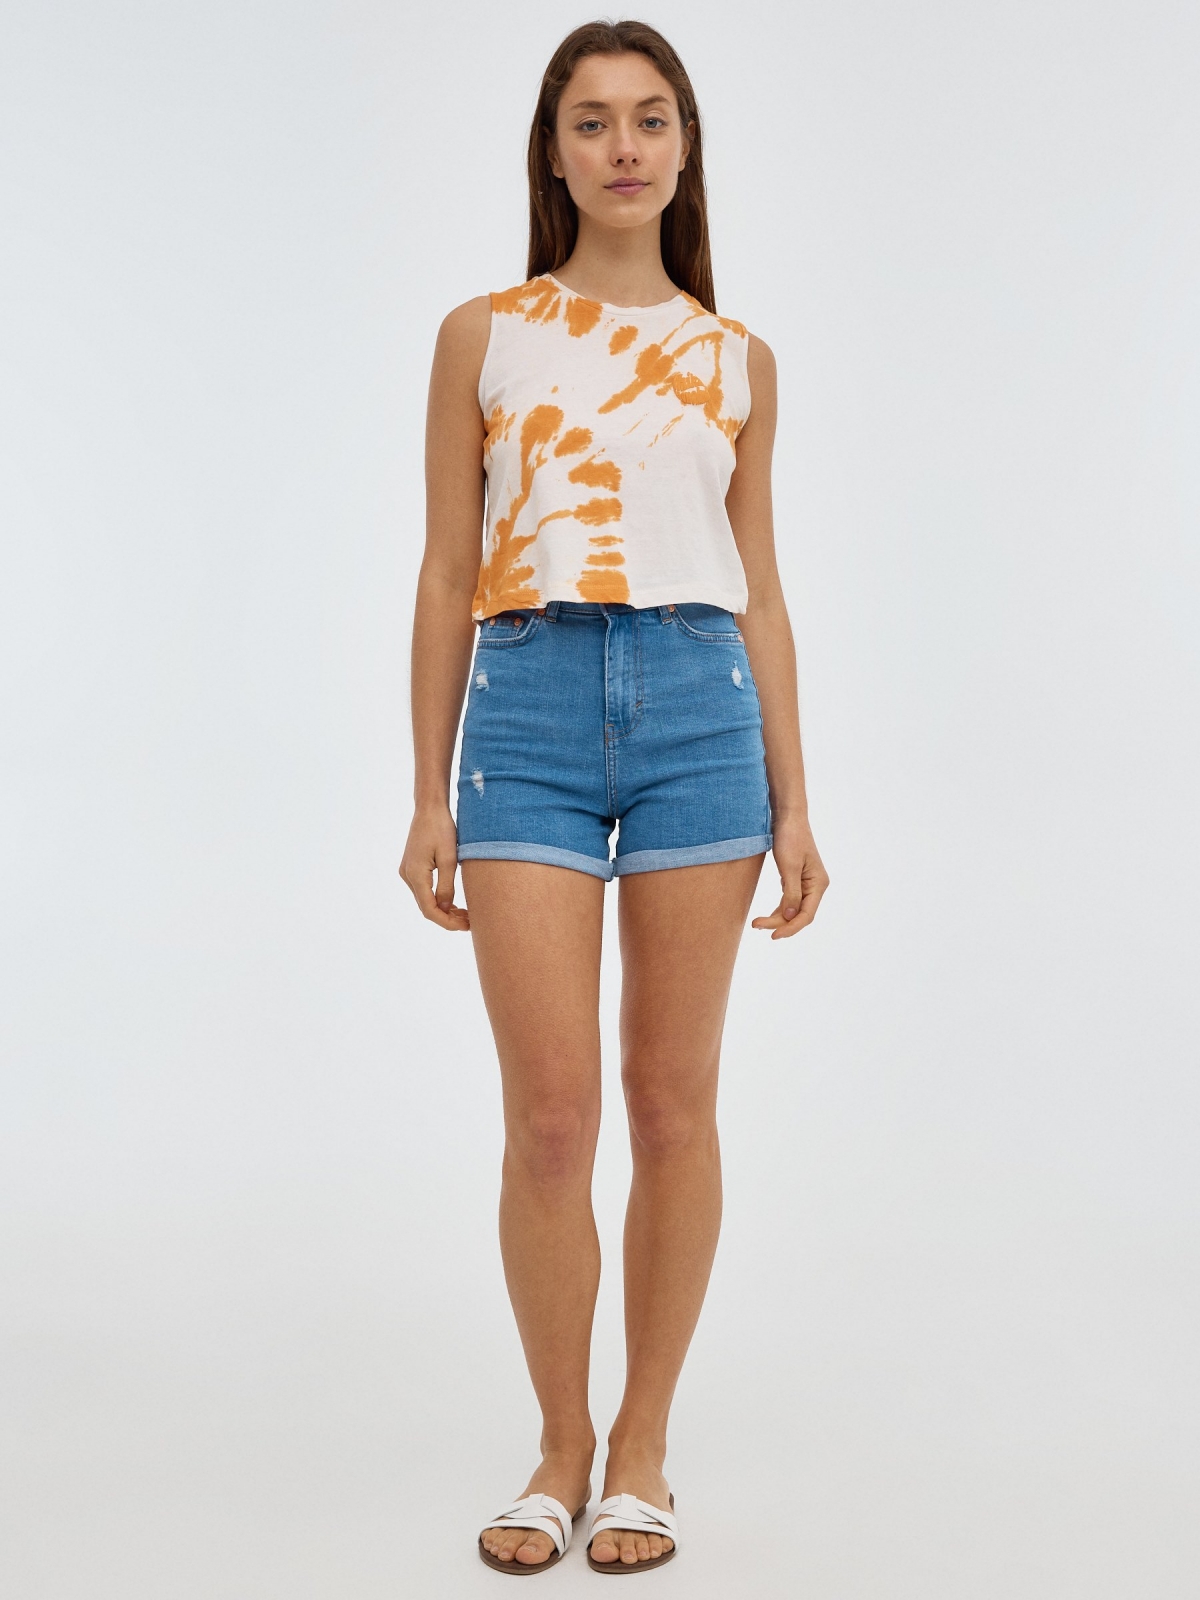 Tie&dye sleeveless T-shirt caldera orange front view